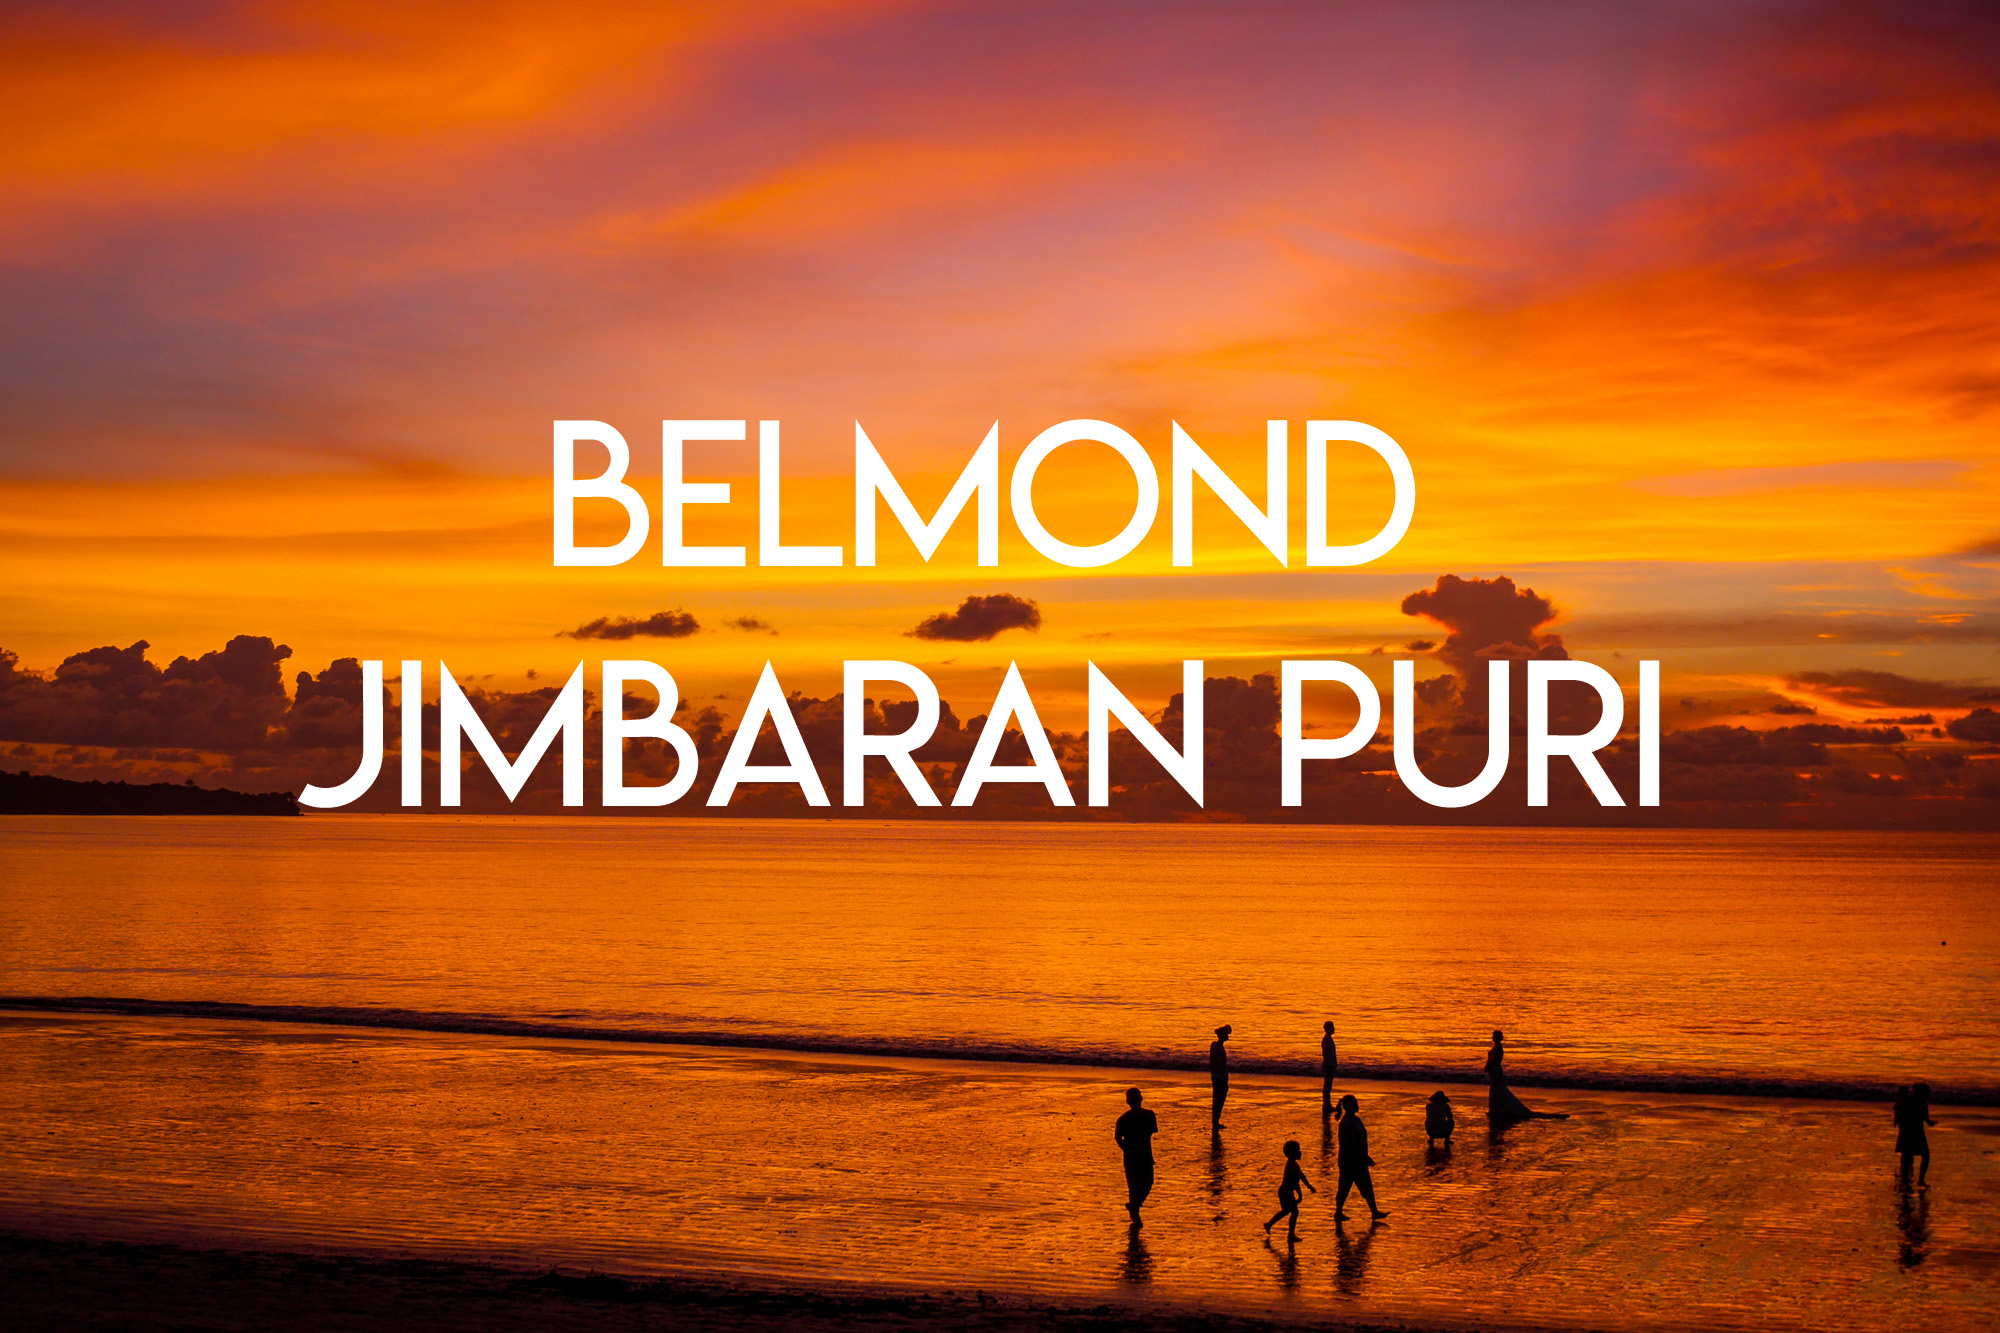 Belmond Jimbaran Puri: The Perfect Beach Getaway